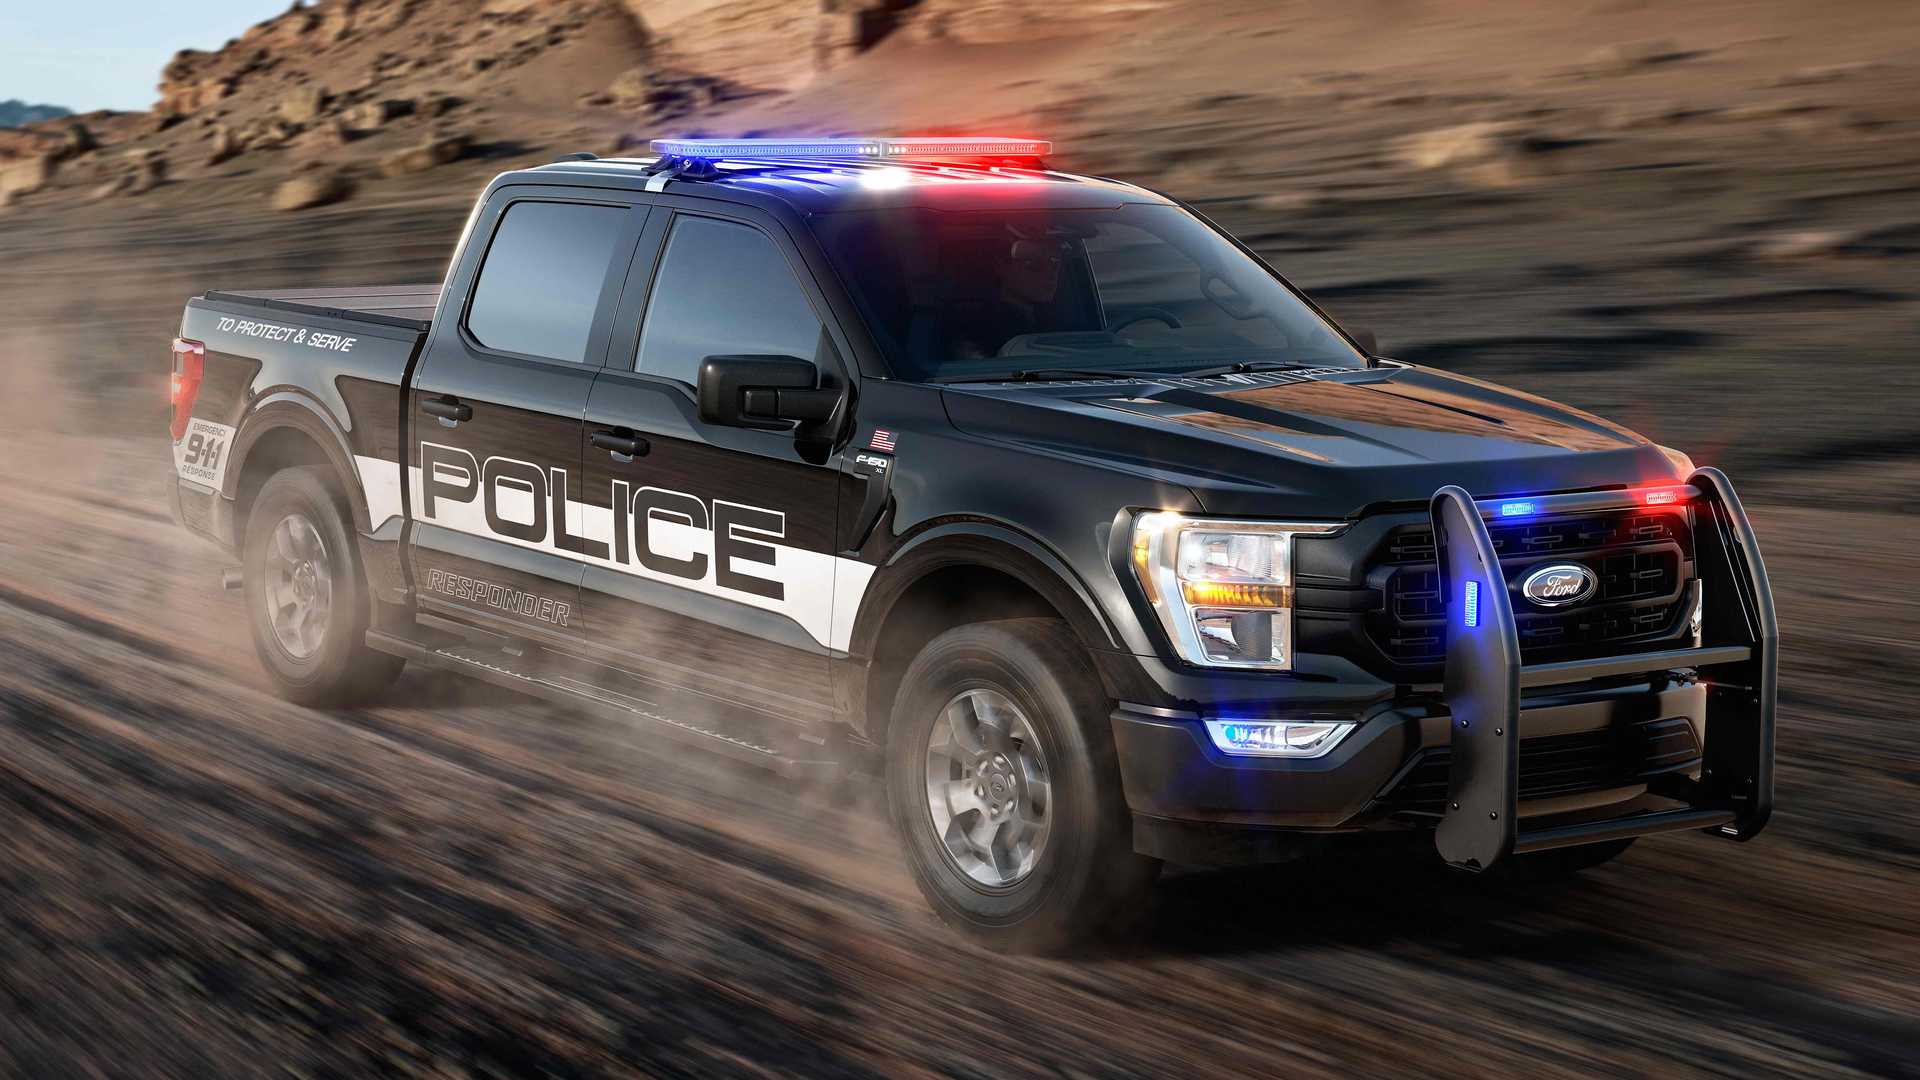 Ford predstavlja potpuno novi, brži i sposobniji 150 F-2021 Police Responder